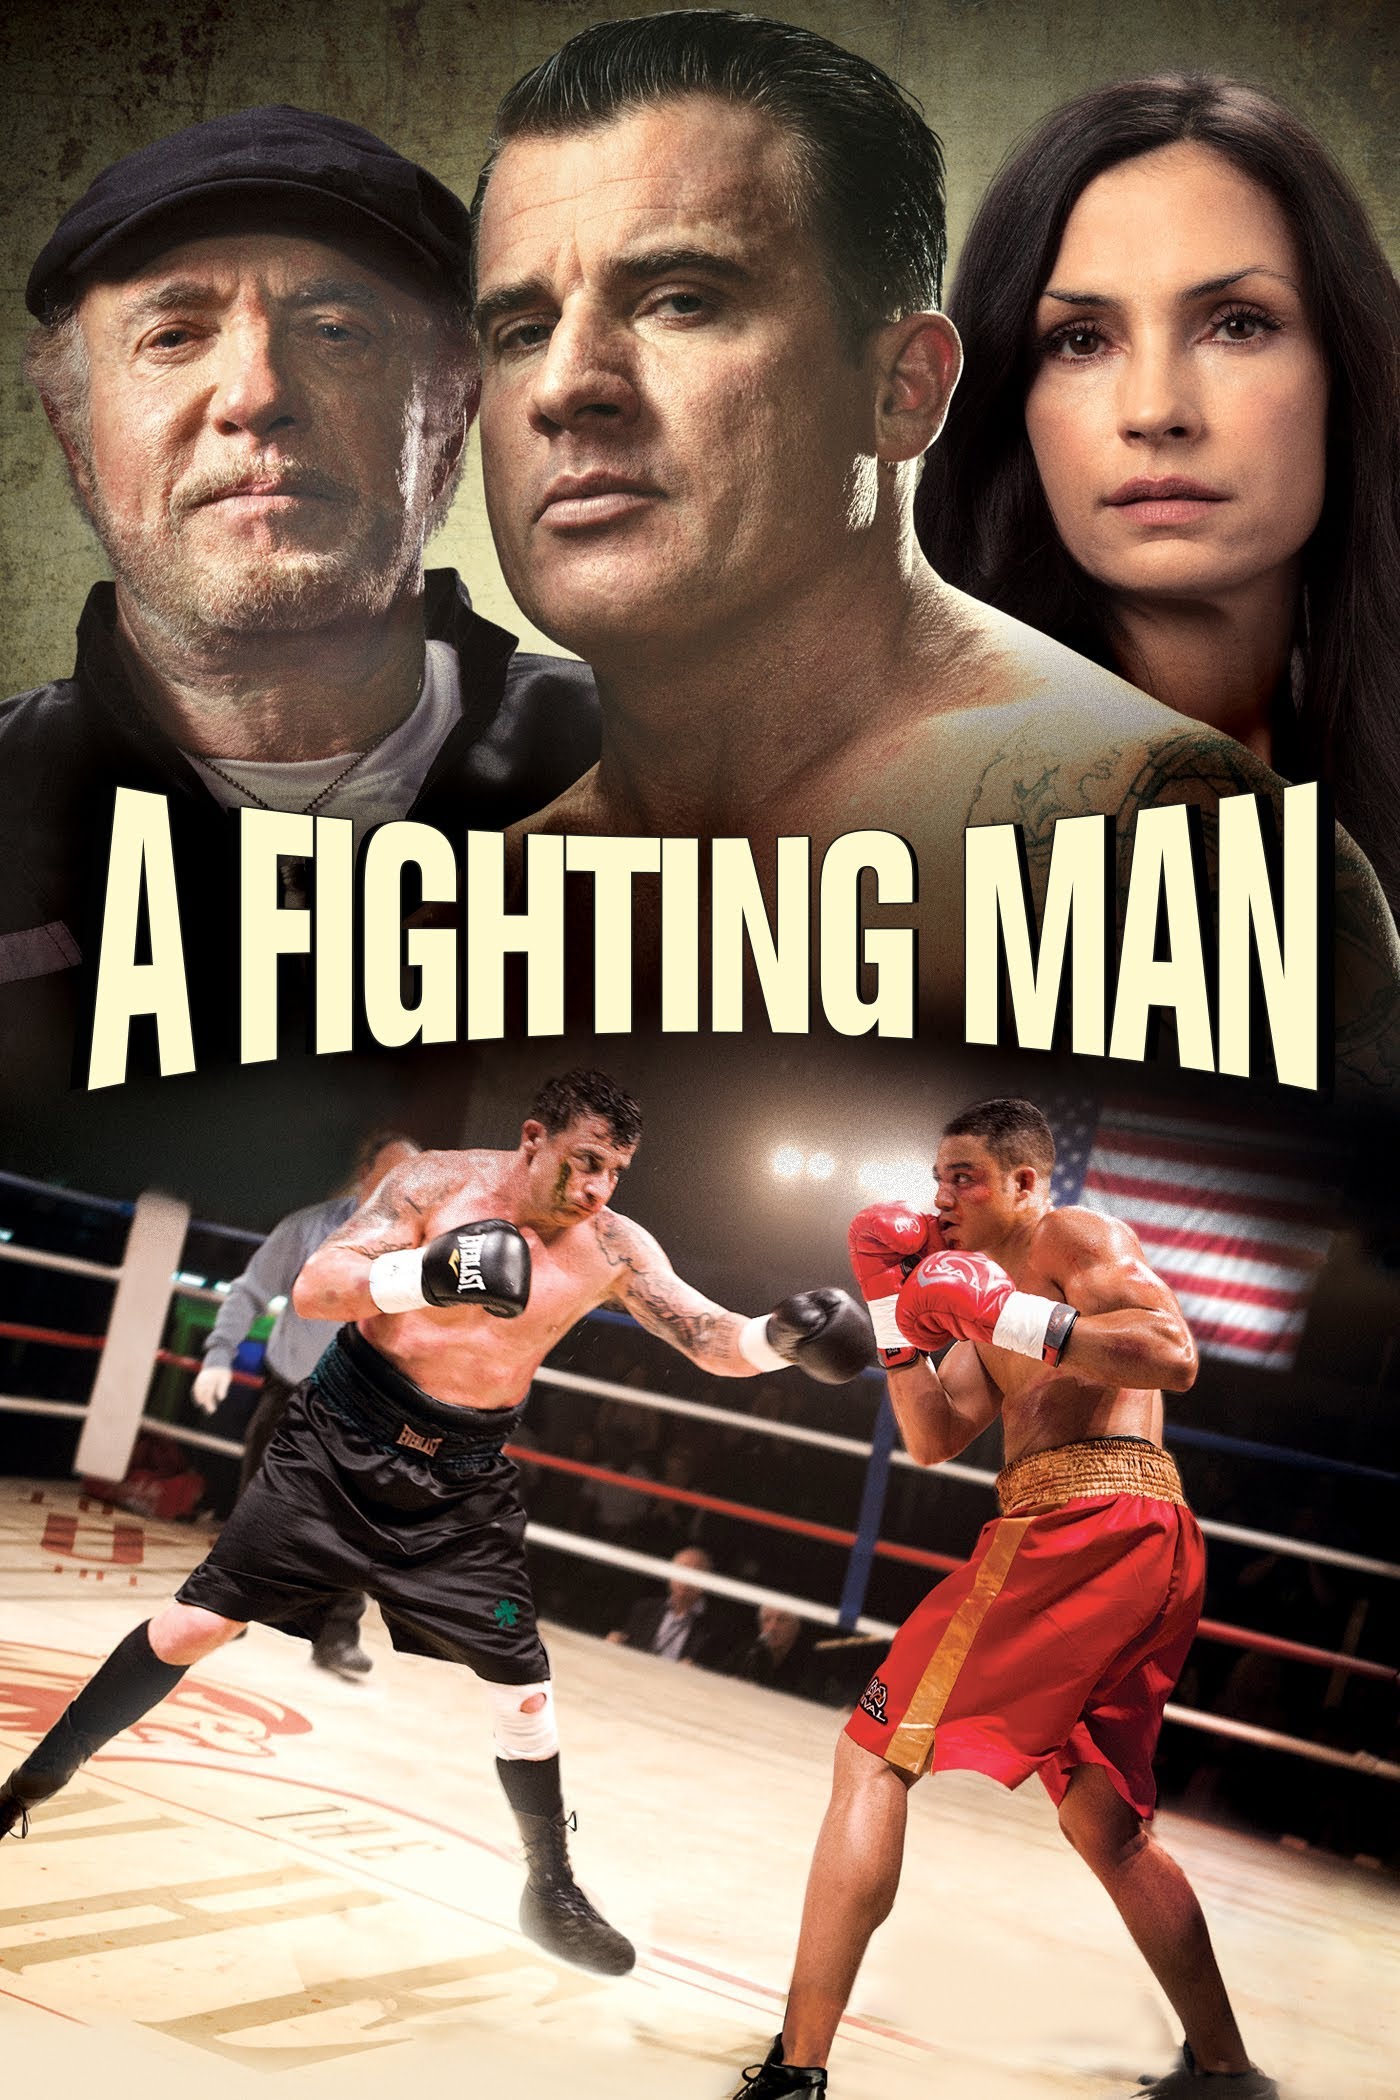 A Fighting Man [HD] (2014)